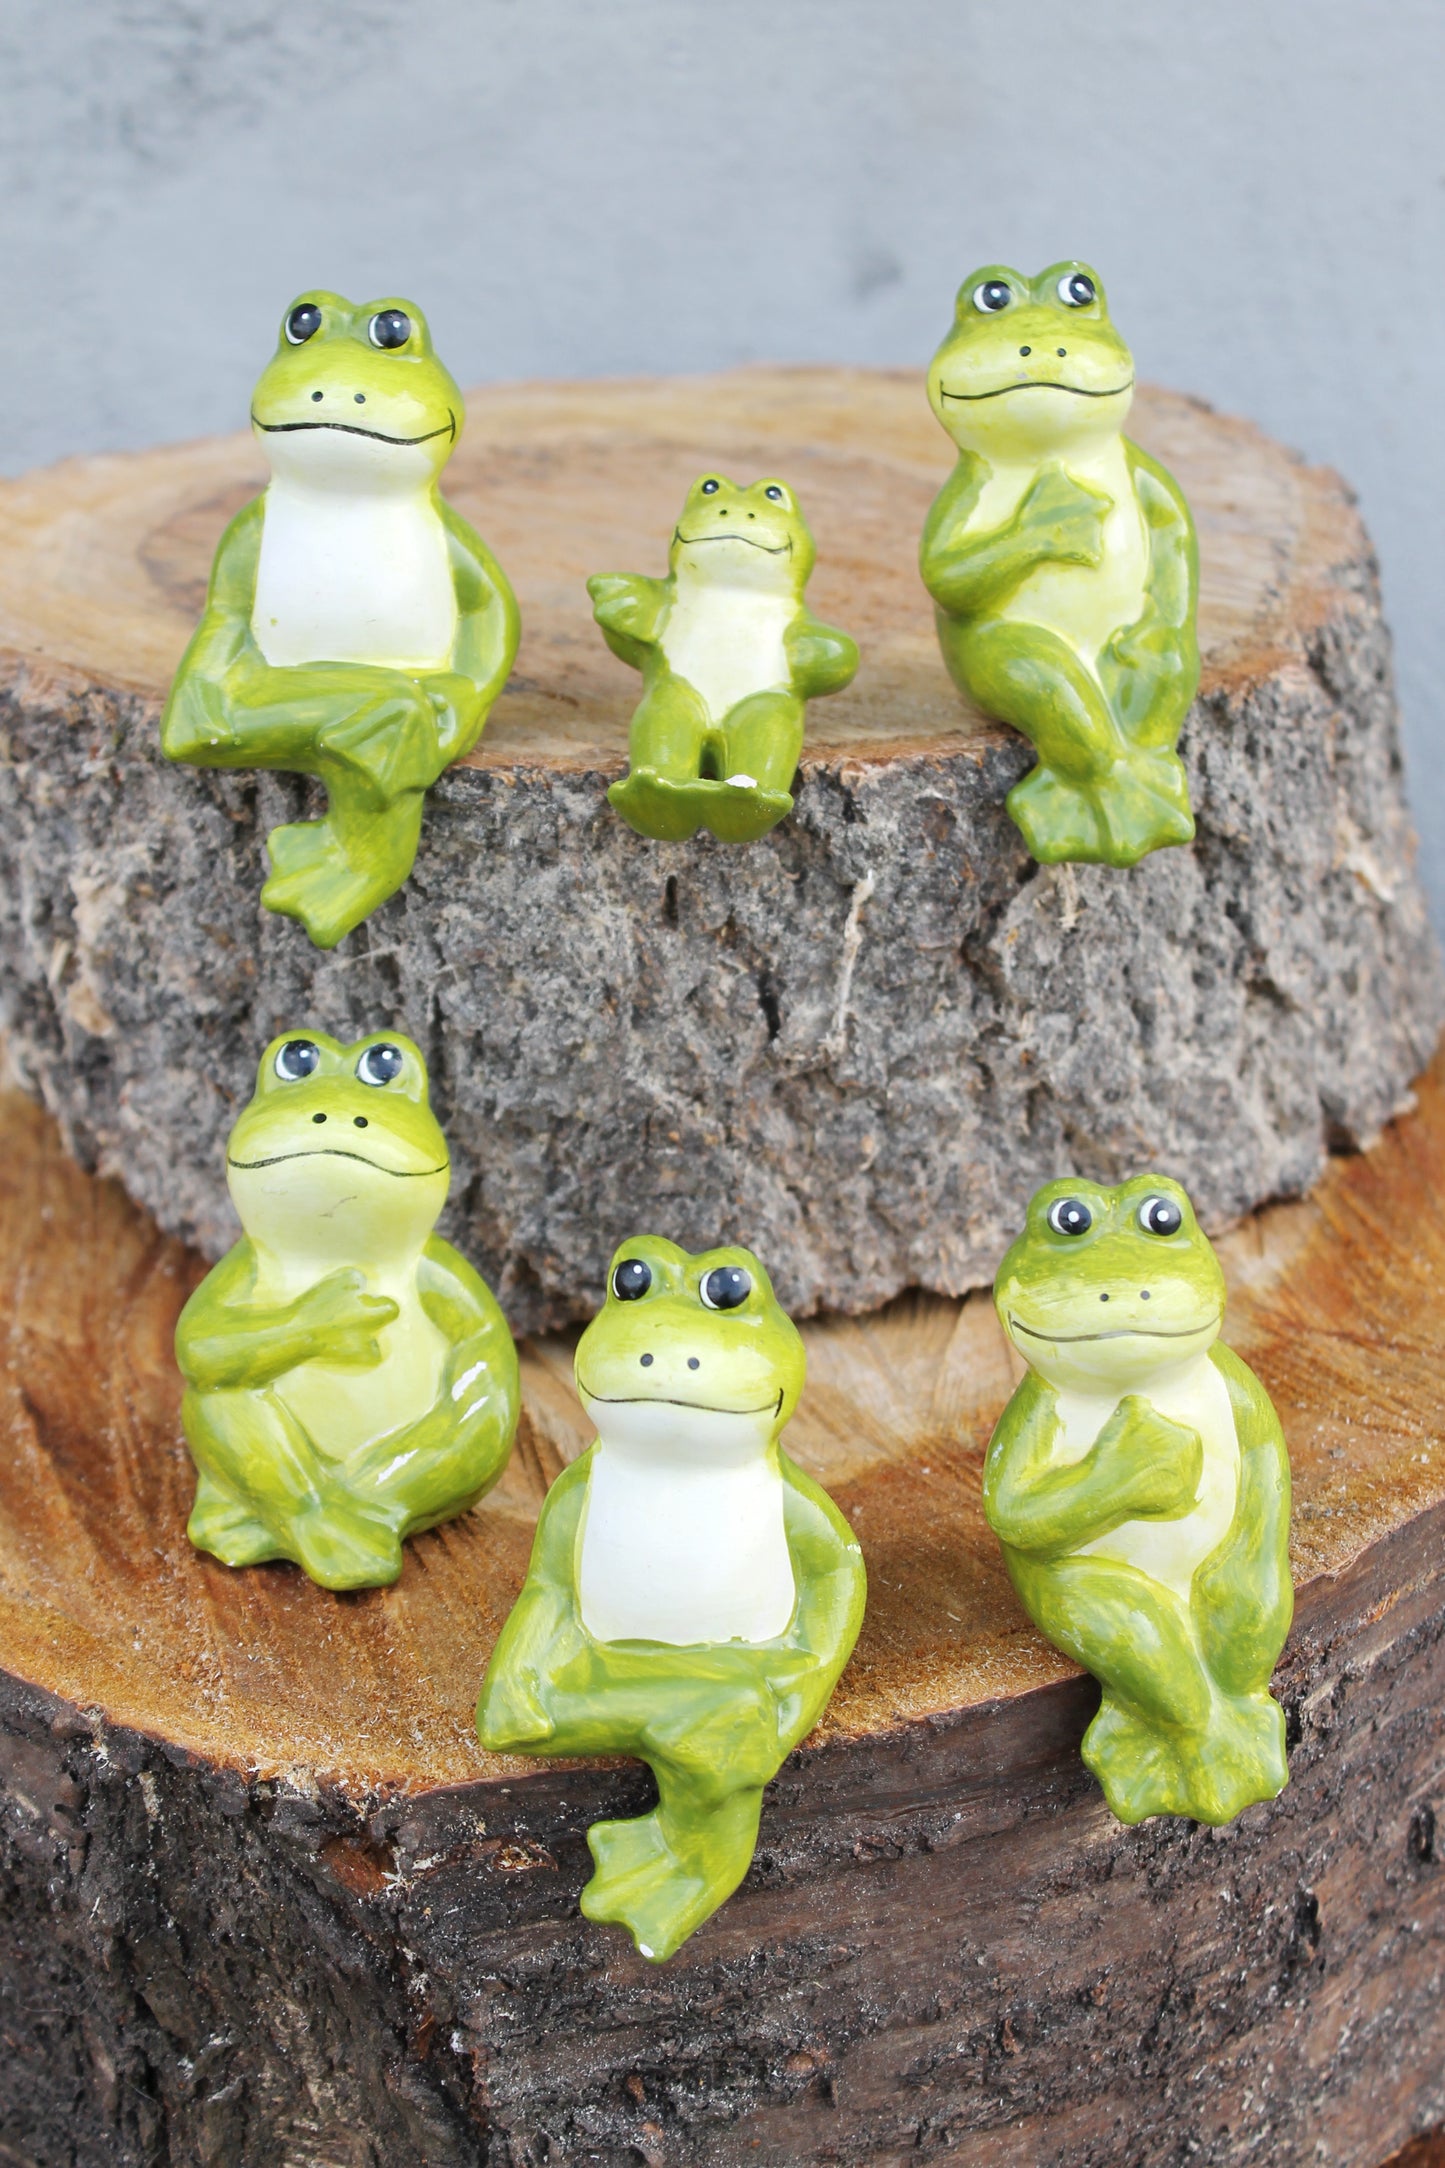 Vintage porcelain set of six sitting Frogs - Germany small figurines - vintage decor - Germany vintage - 1990s